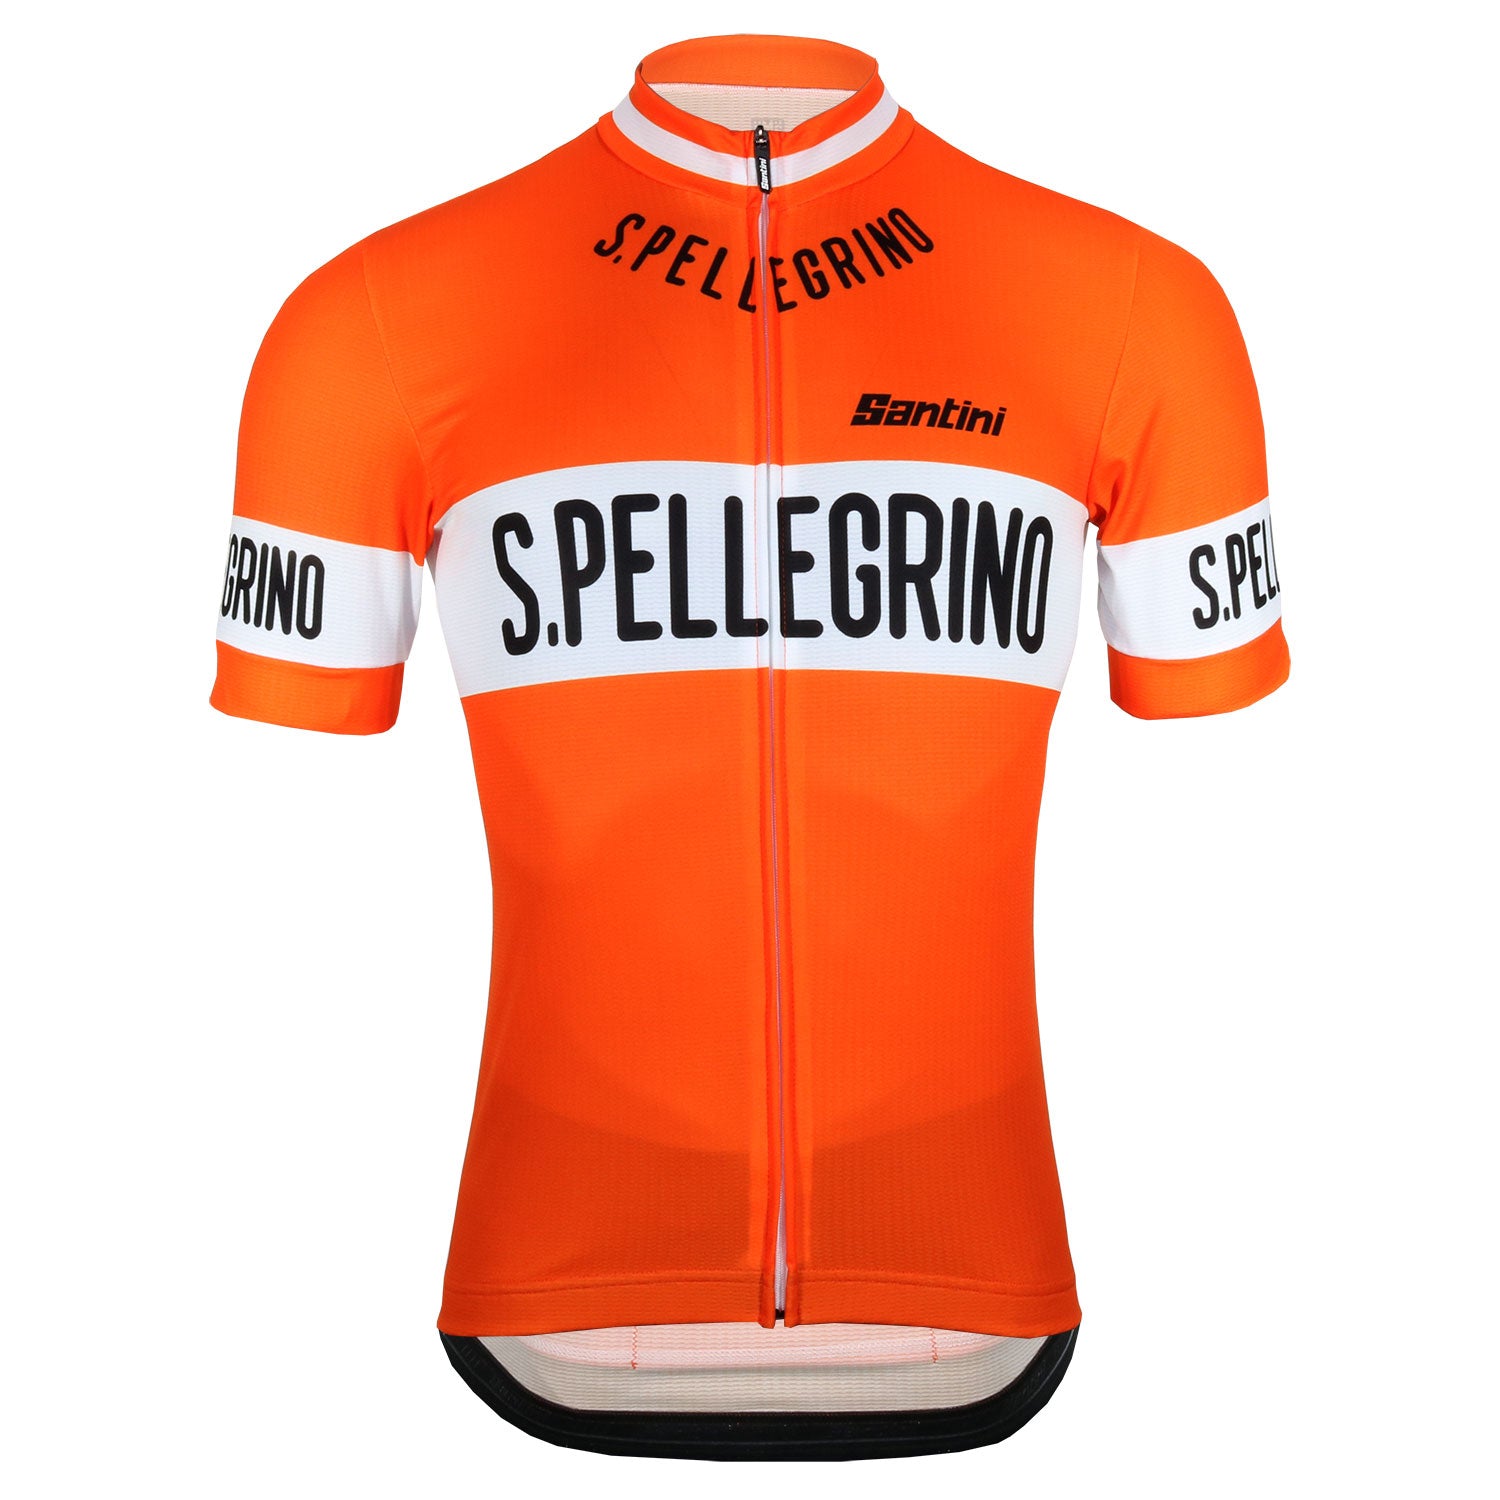 Santini, Replica San Pellegrino Retro Cycling Jersey